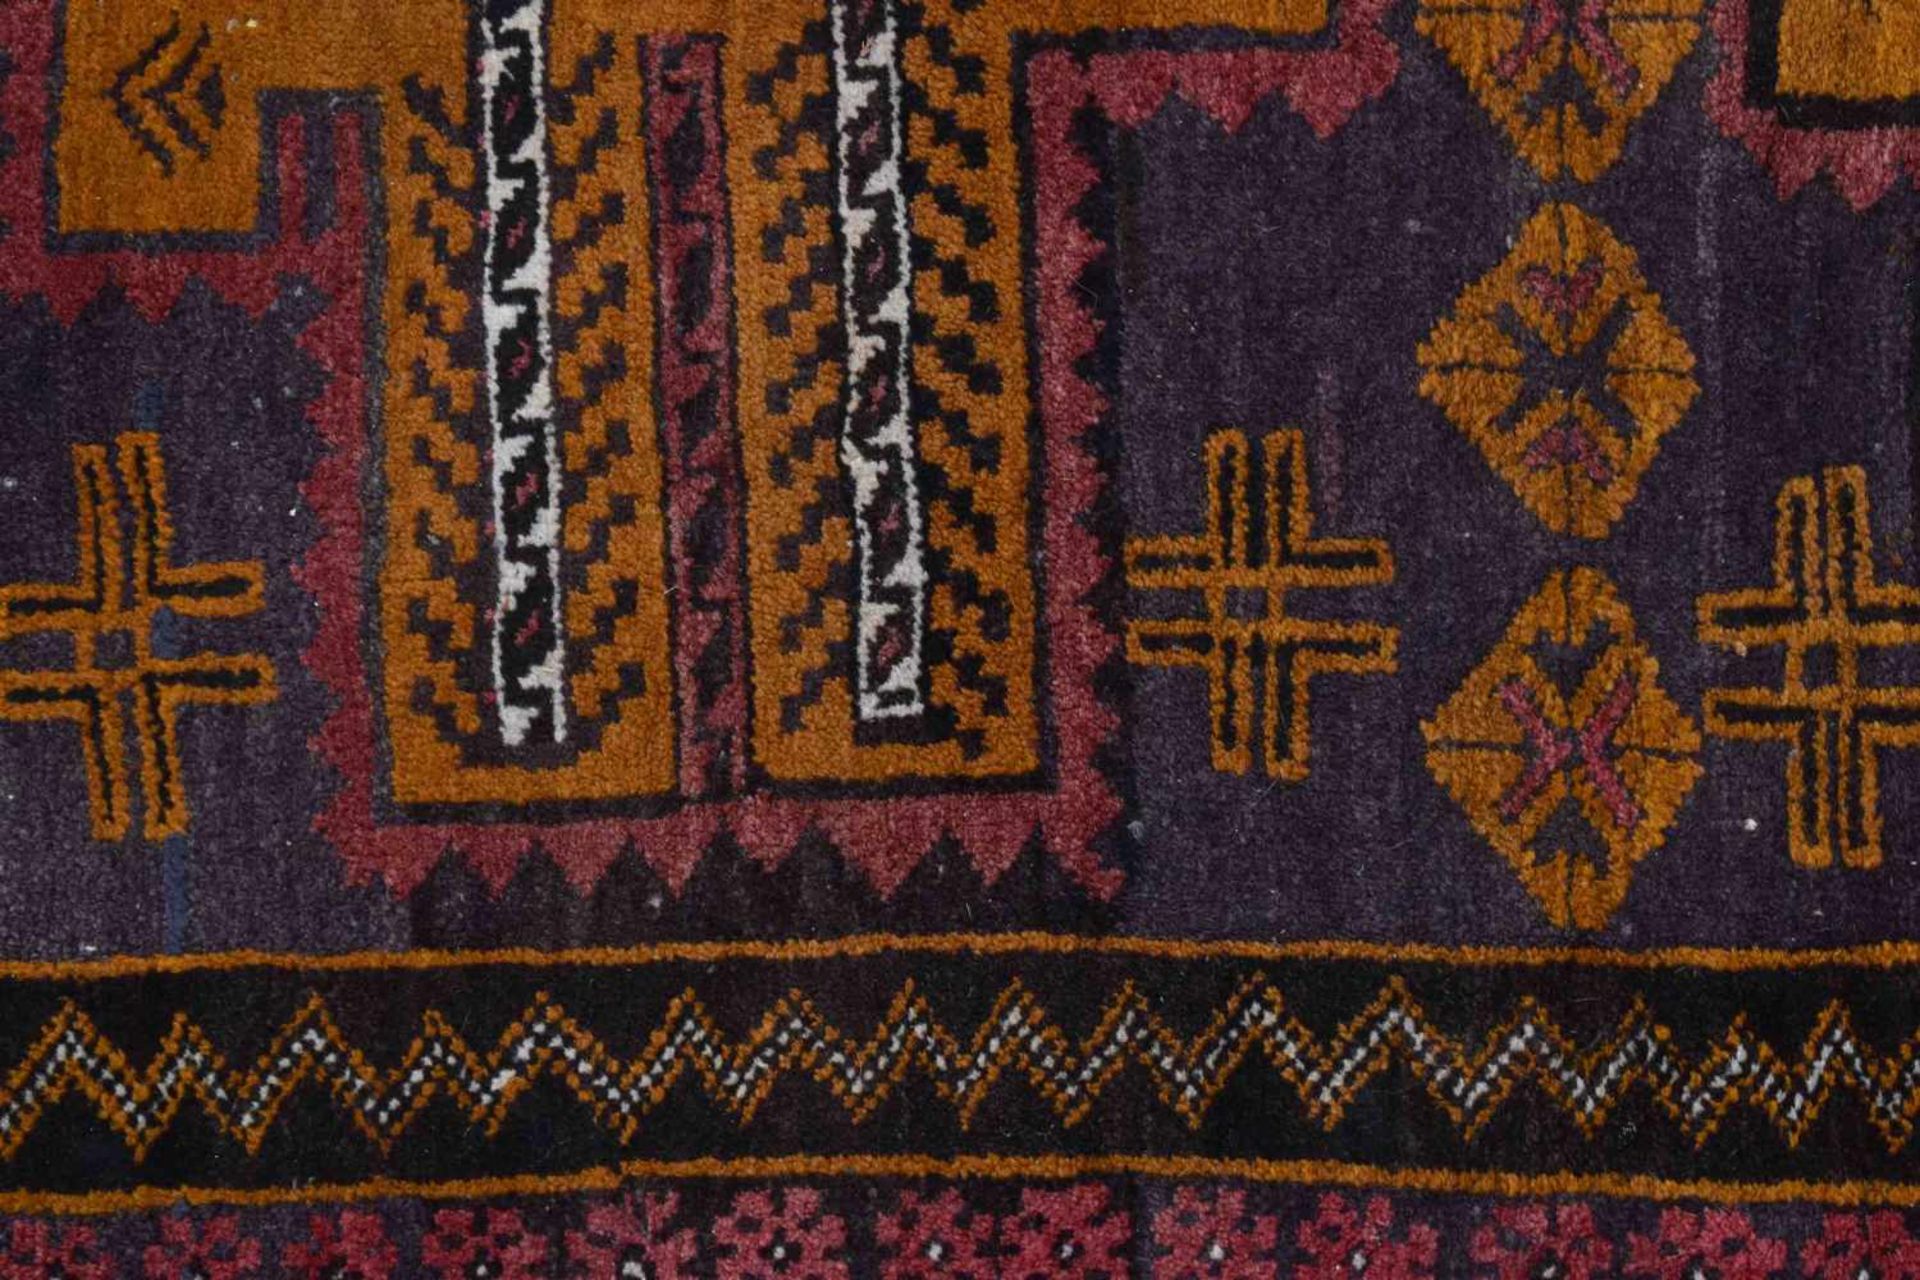 alter Orient Teppichhandgeknüpft, 190 cm x 117 cmold orient carpethand knotted, 190 cm x 117 cm - Image 2 of 3